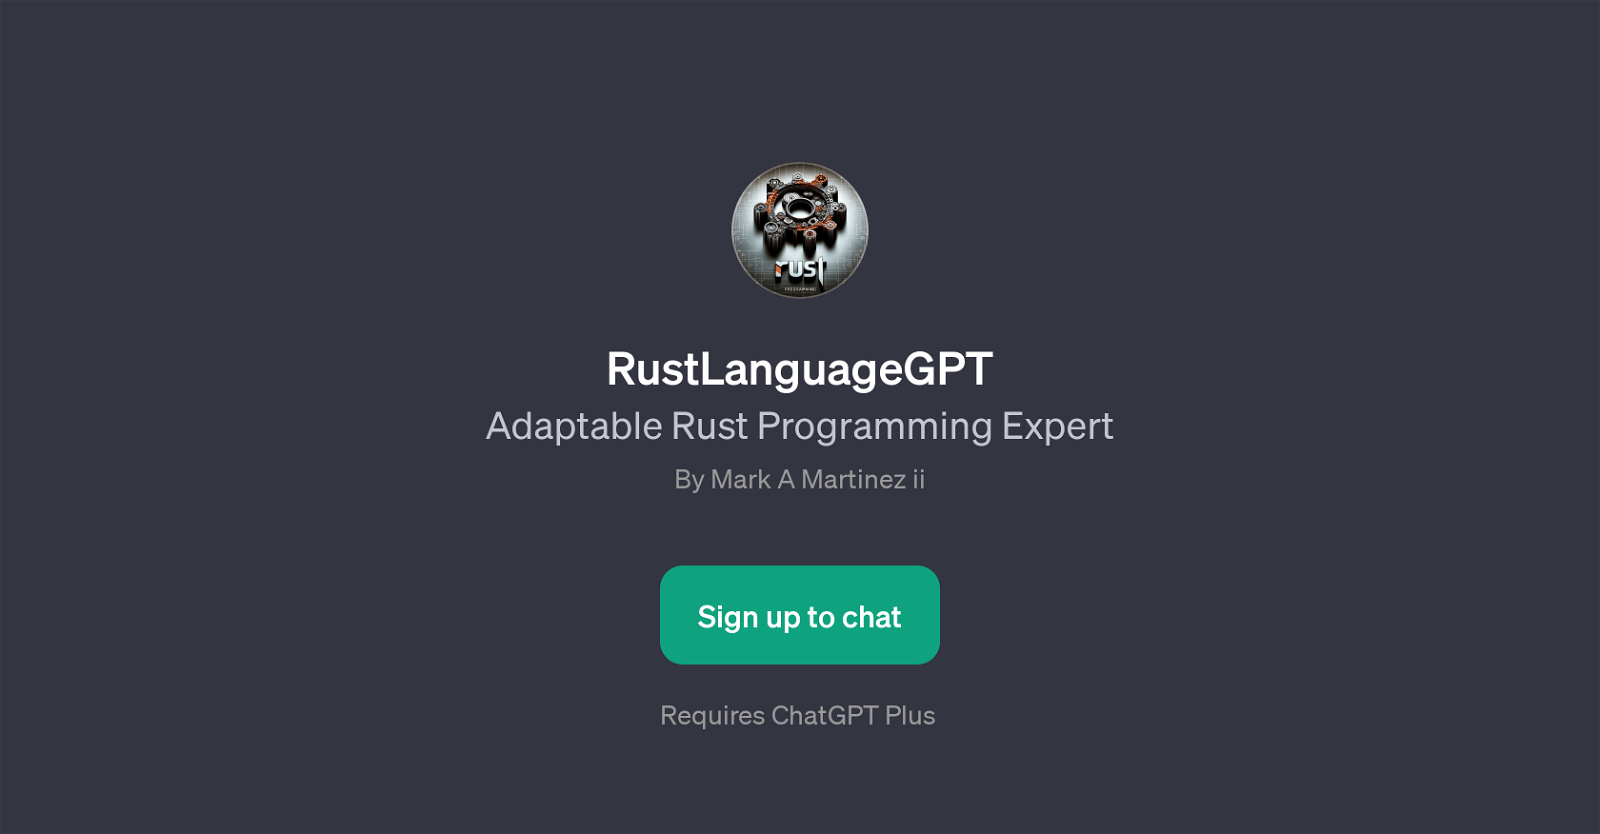 RustLanguageGPT website